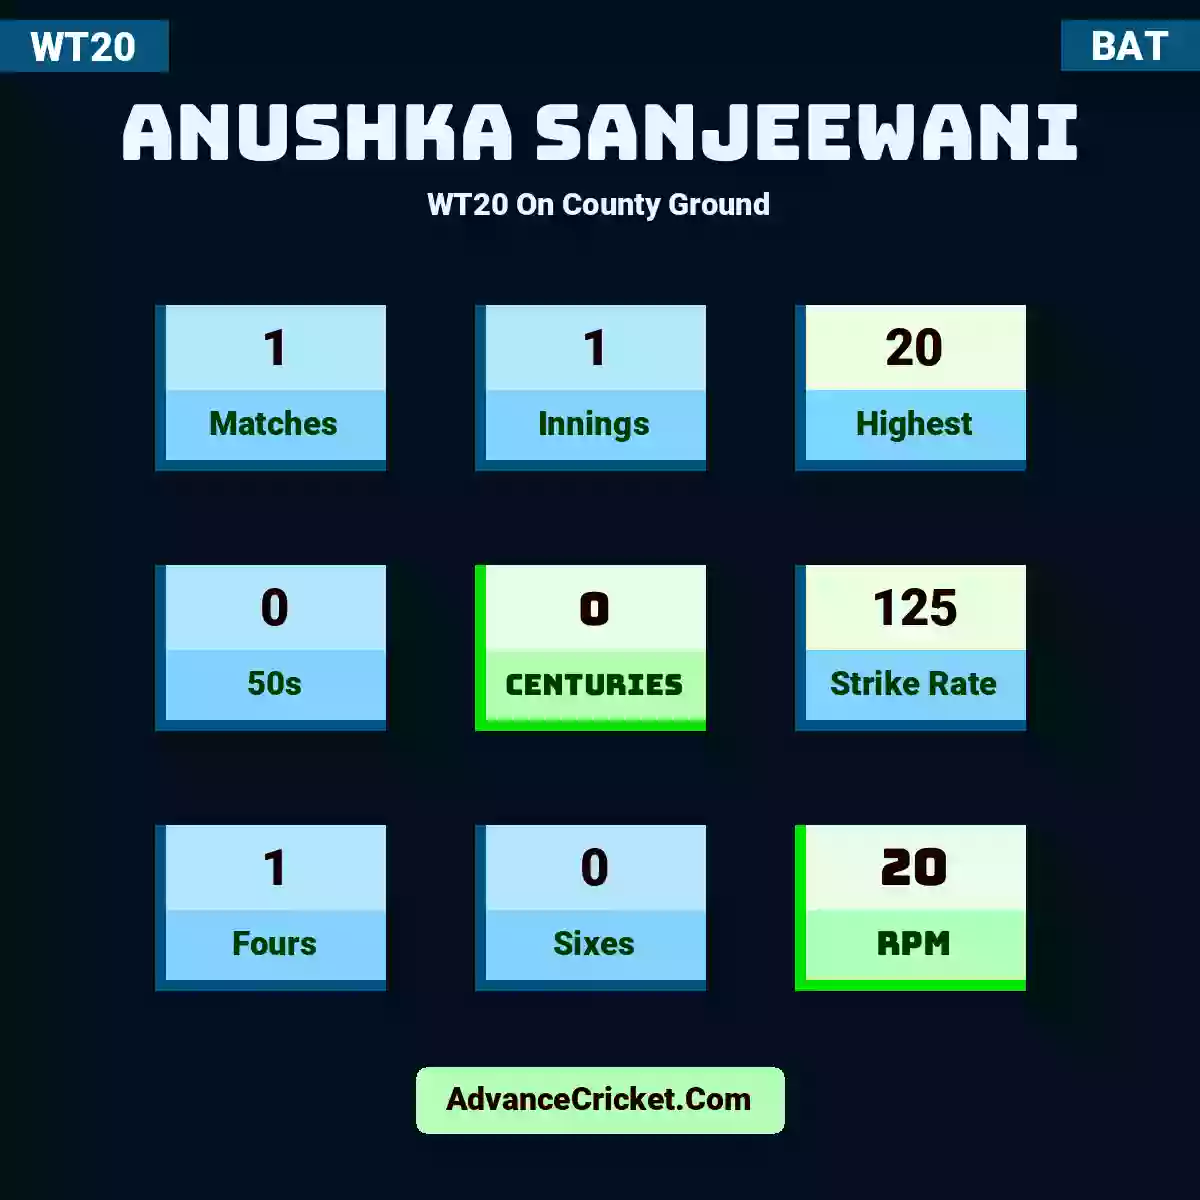 Anushka Sanjeewani WT20  On County Ground, Anushka Sanjeewani played 1 matches, scored 0 runs as highest, 0 half-centuries, and 0 centuries, with a strike rate of 0. A.Sanjeewani hit 0 fours and 0 sixes.